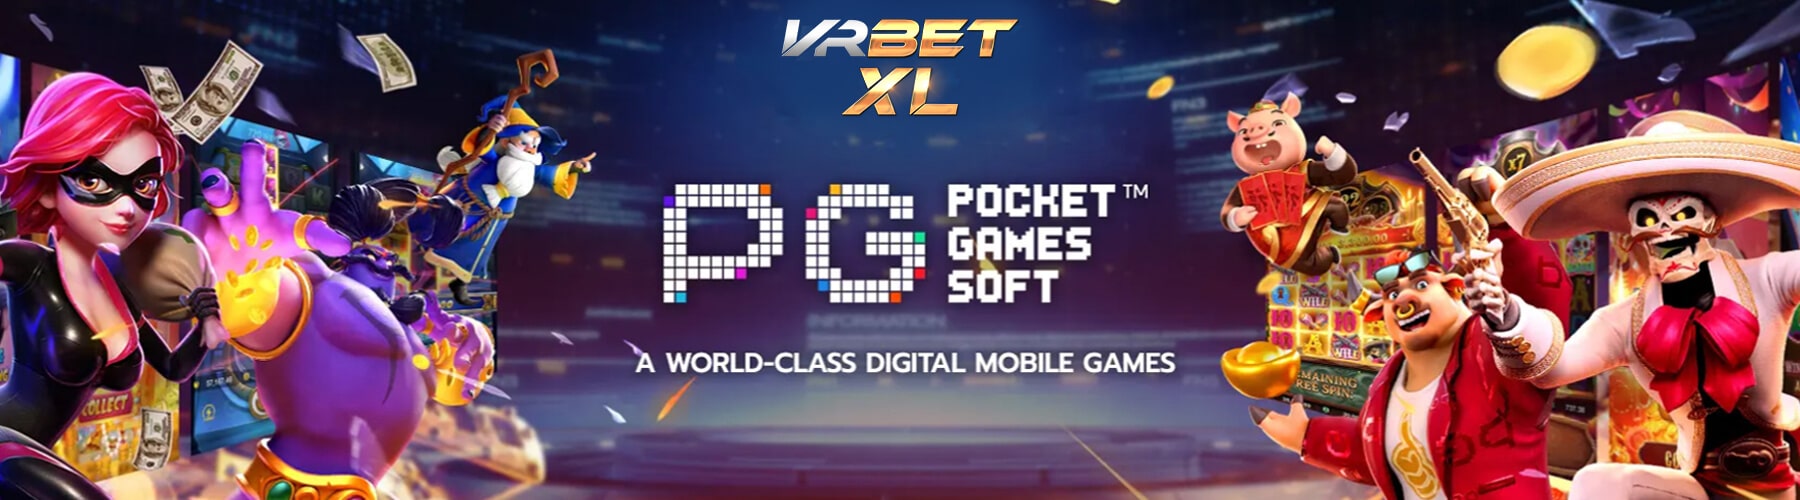 VRBETXL - PG Pocket Games Soft